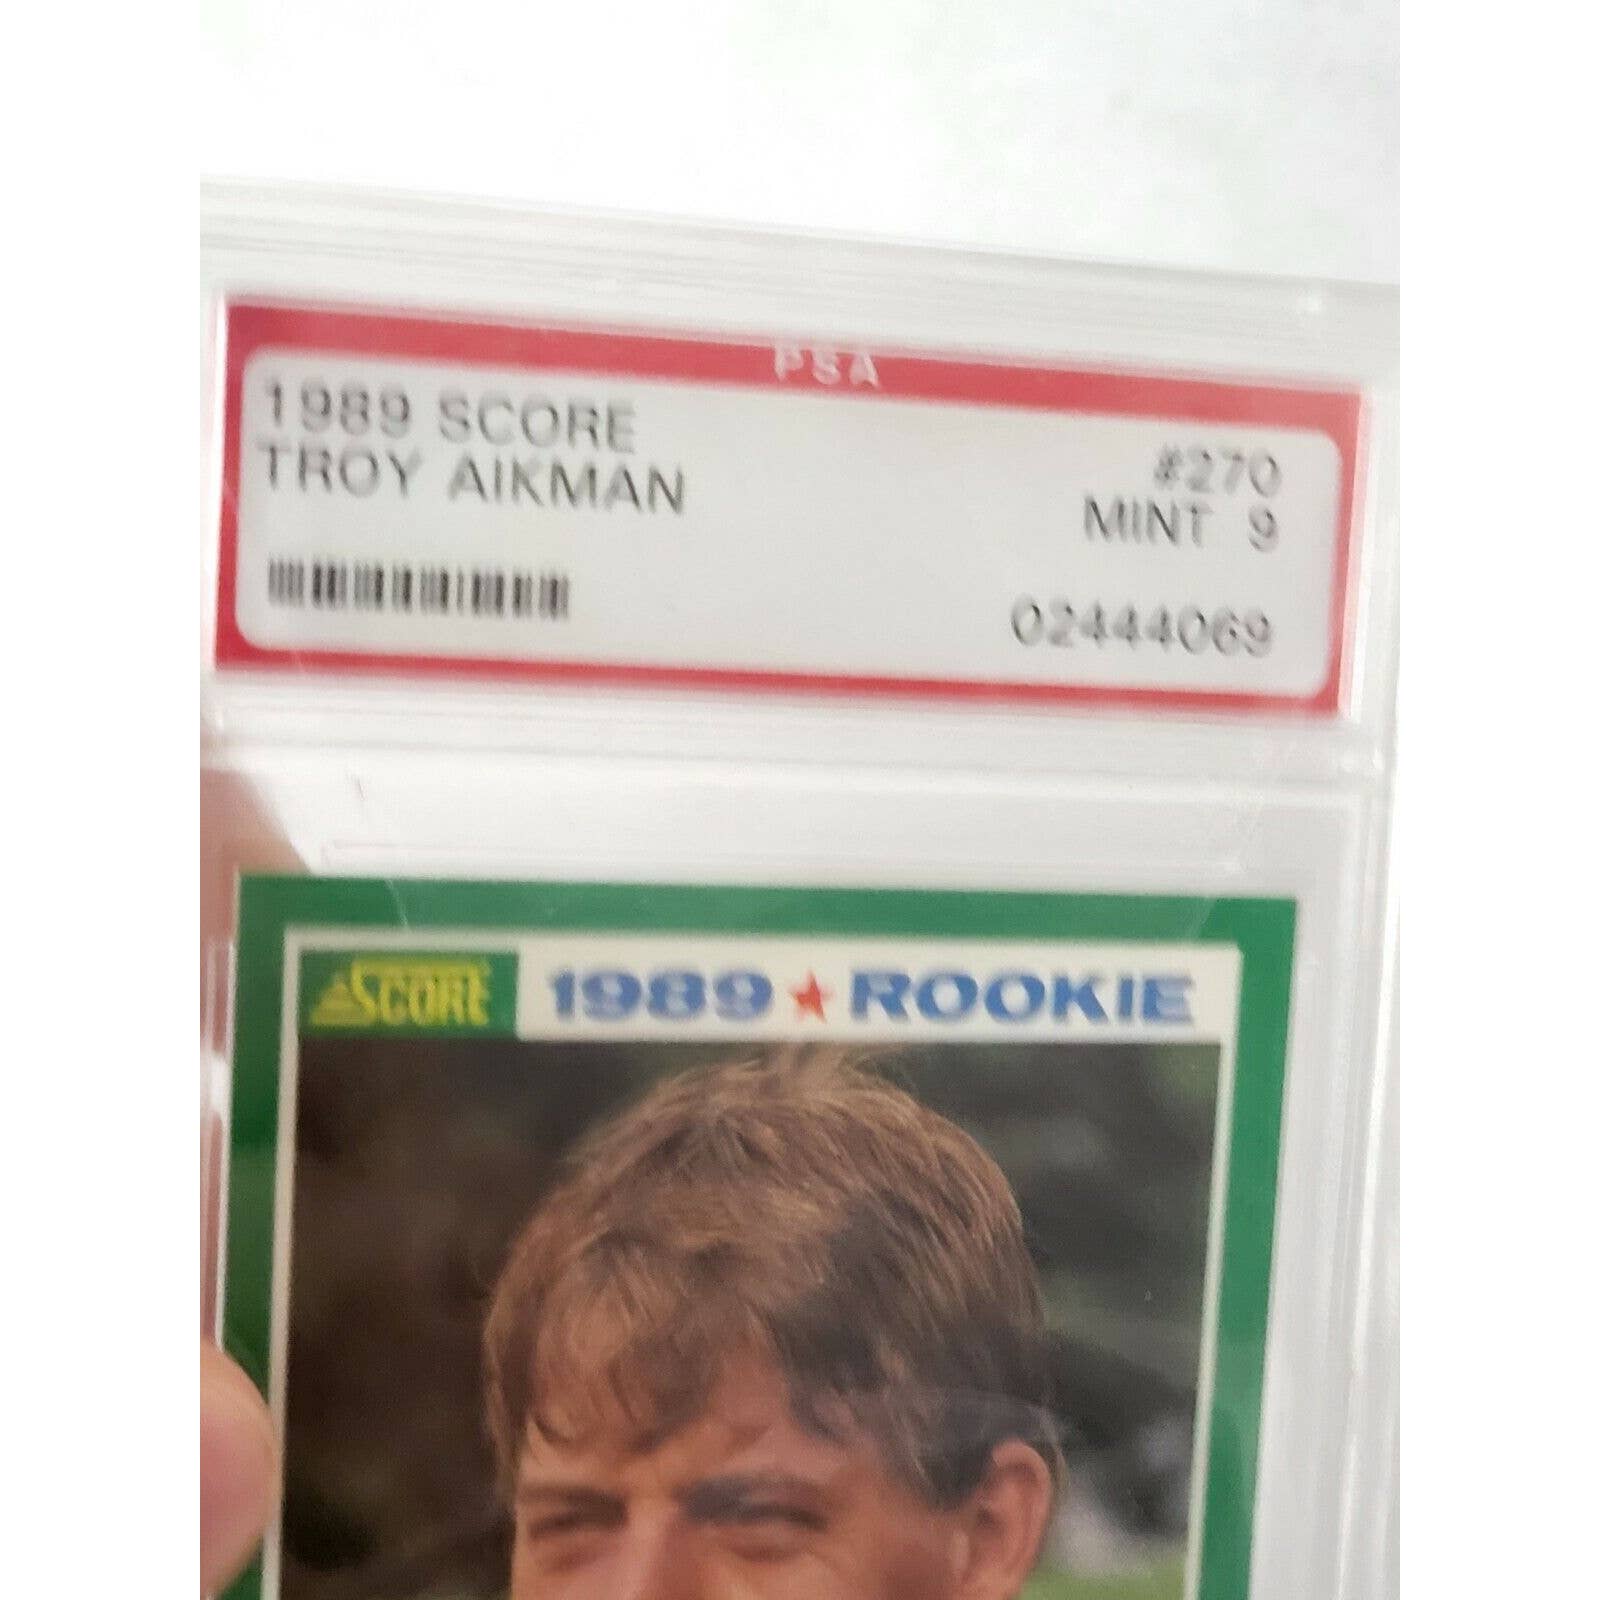 1989 SCORE FOOTBALL TROY AIKMAN ROOKIE RC #270 PSA 9 MINT - TreasuresEvolved